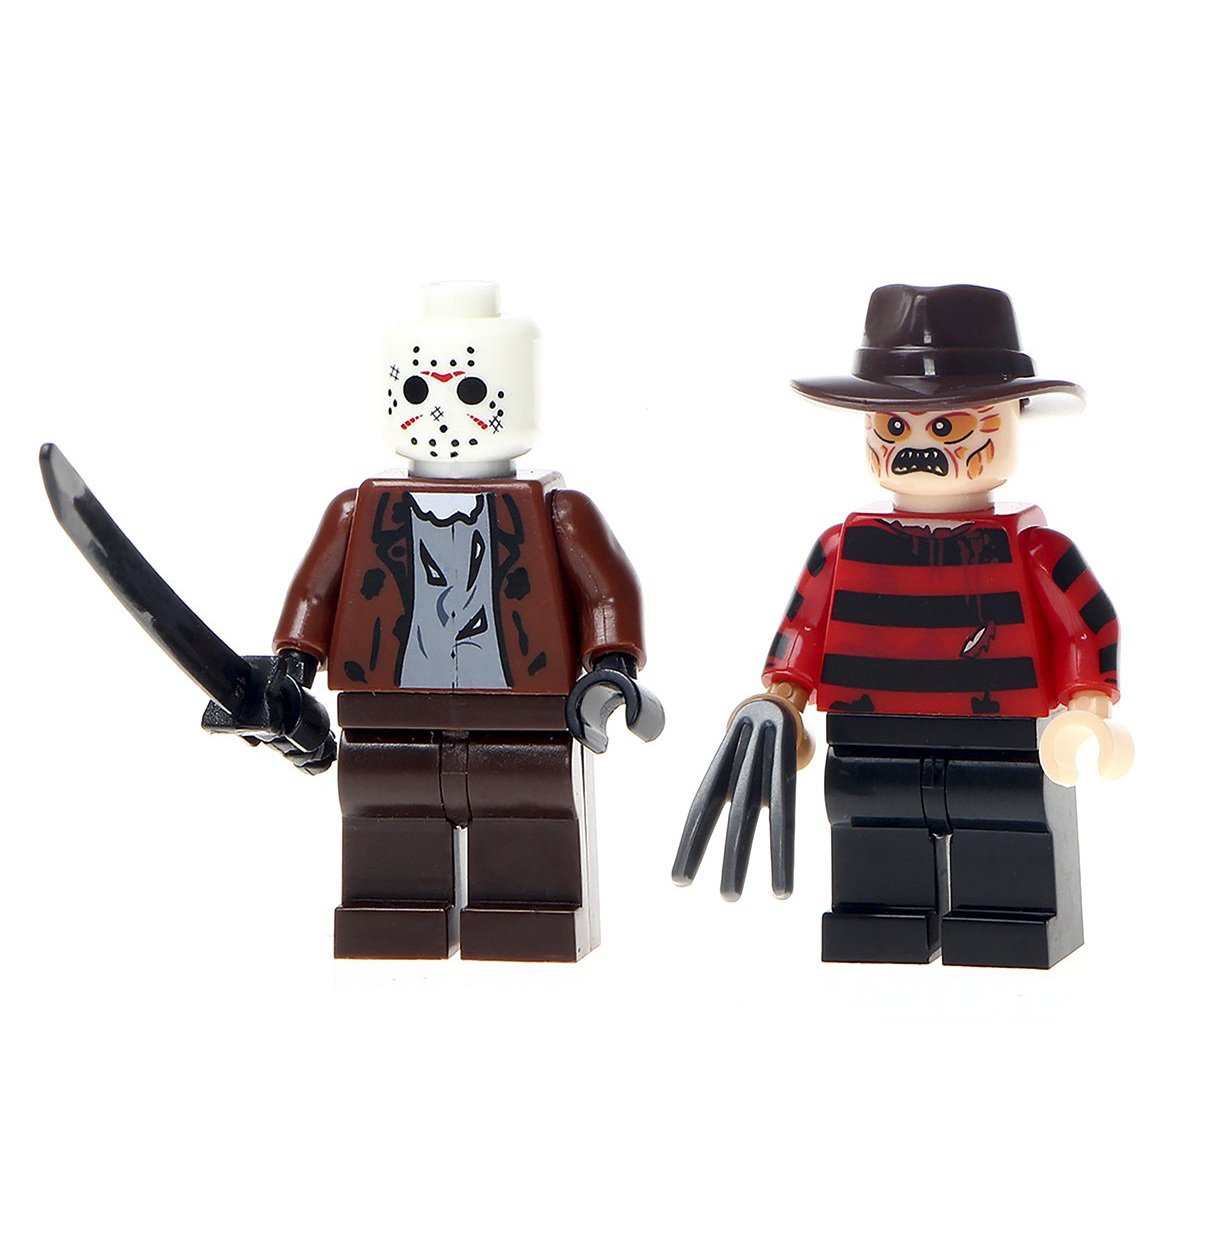 2pcs Set Minifigures Freddy Krueger & Jason Voorhees Compatible Lego Building Block Toys